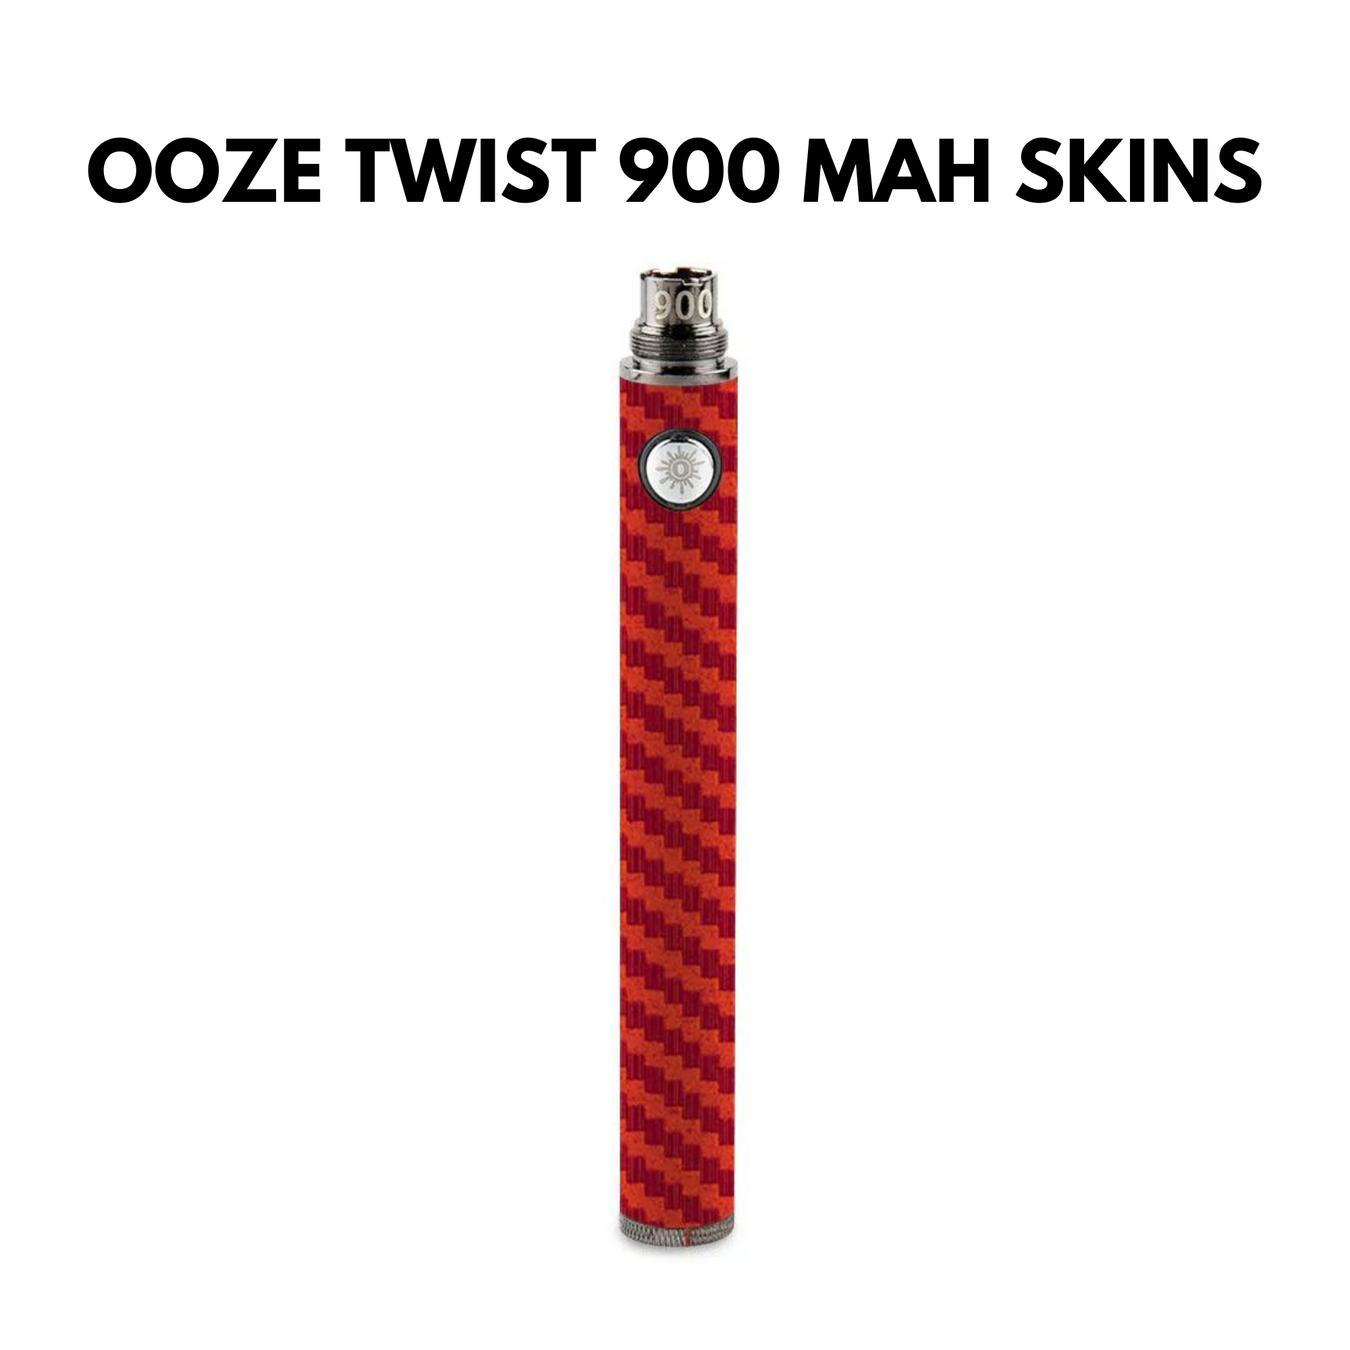 Ooze Twist 900 mAh Skins